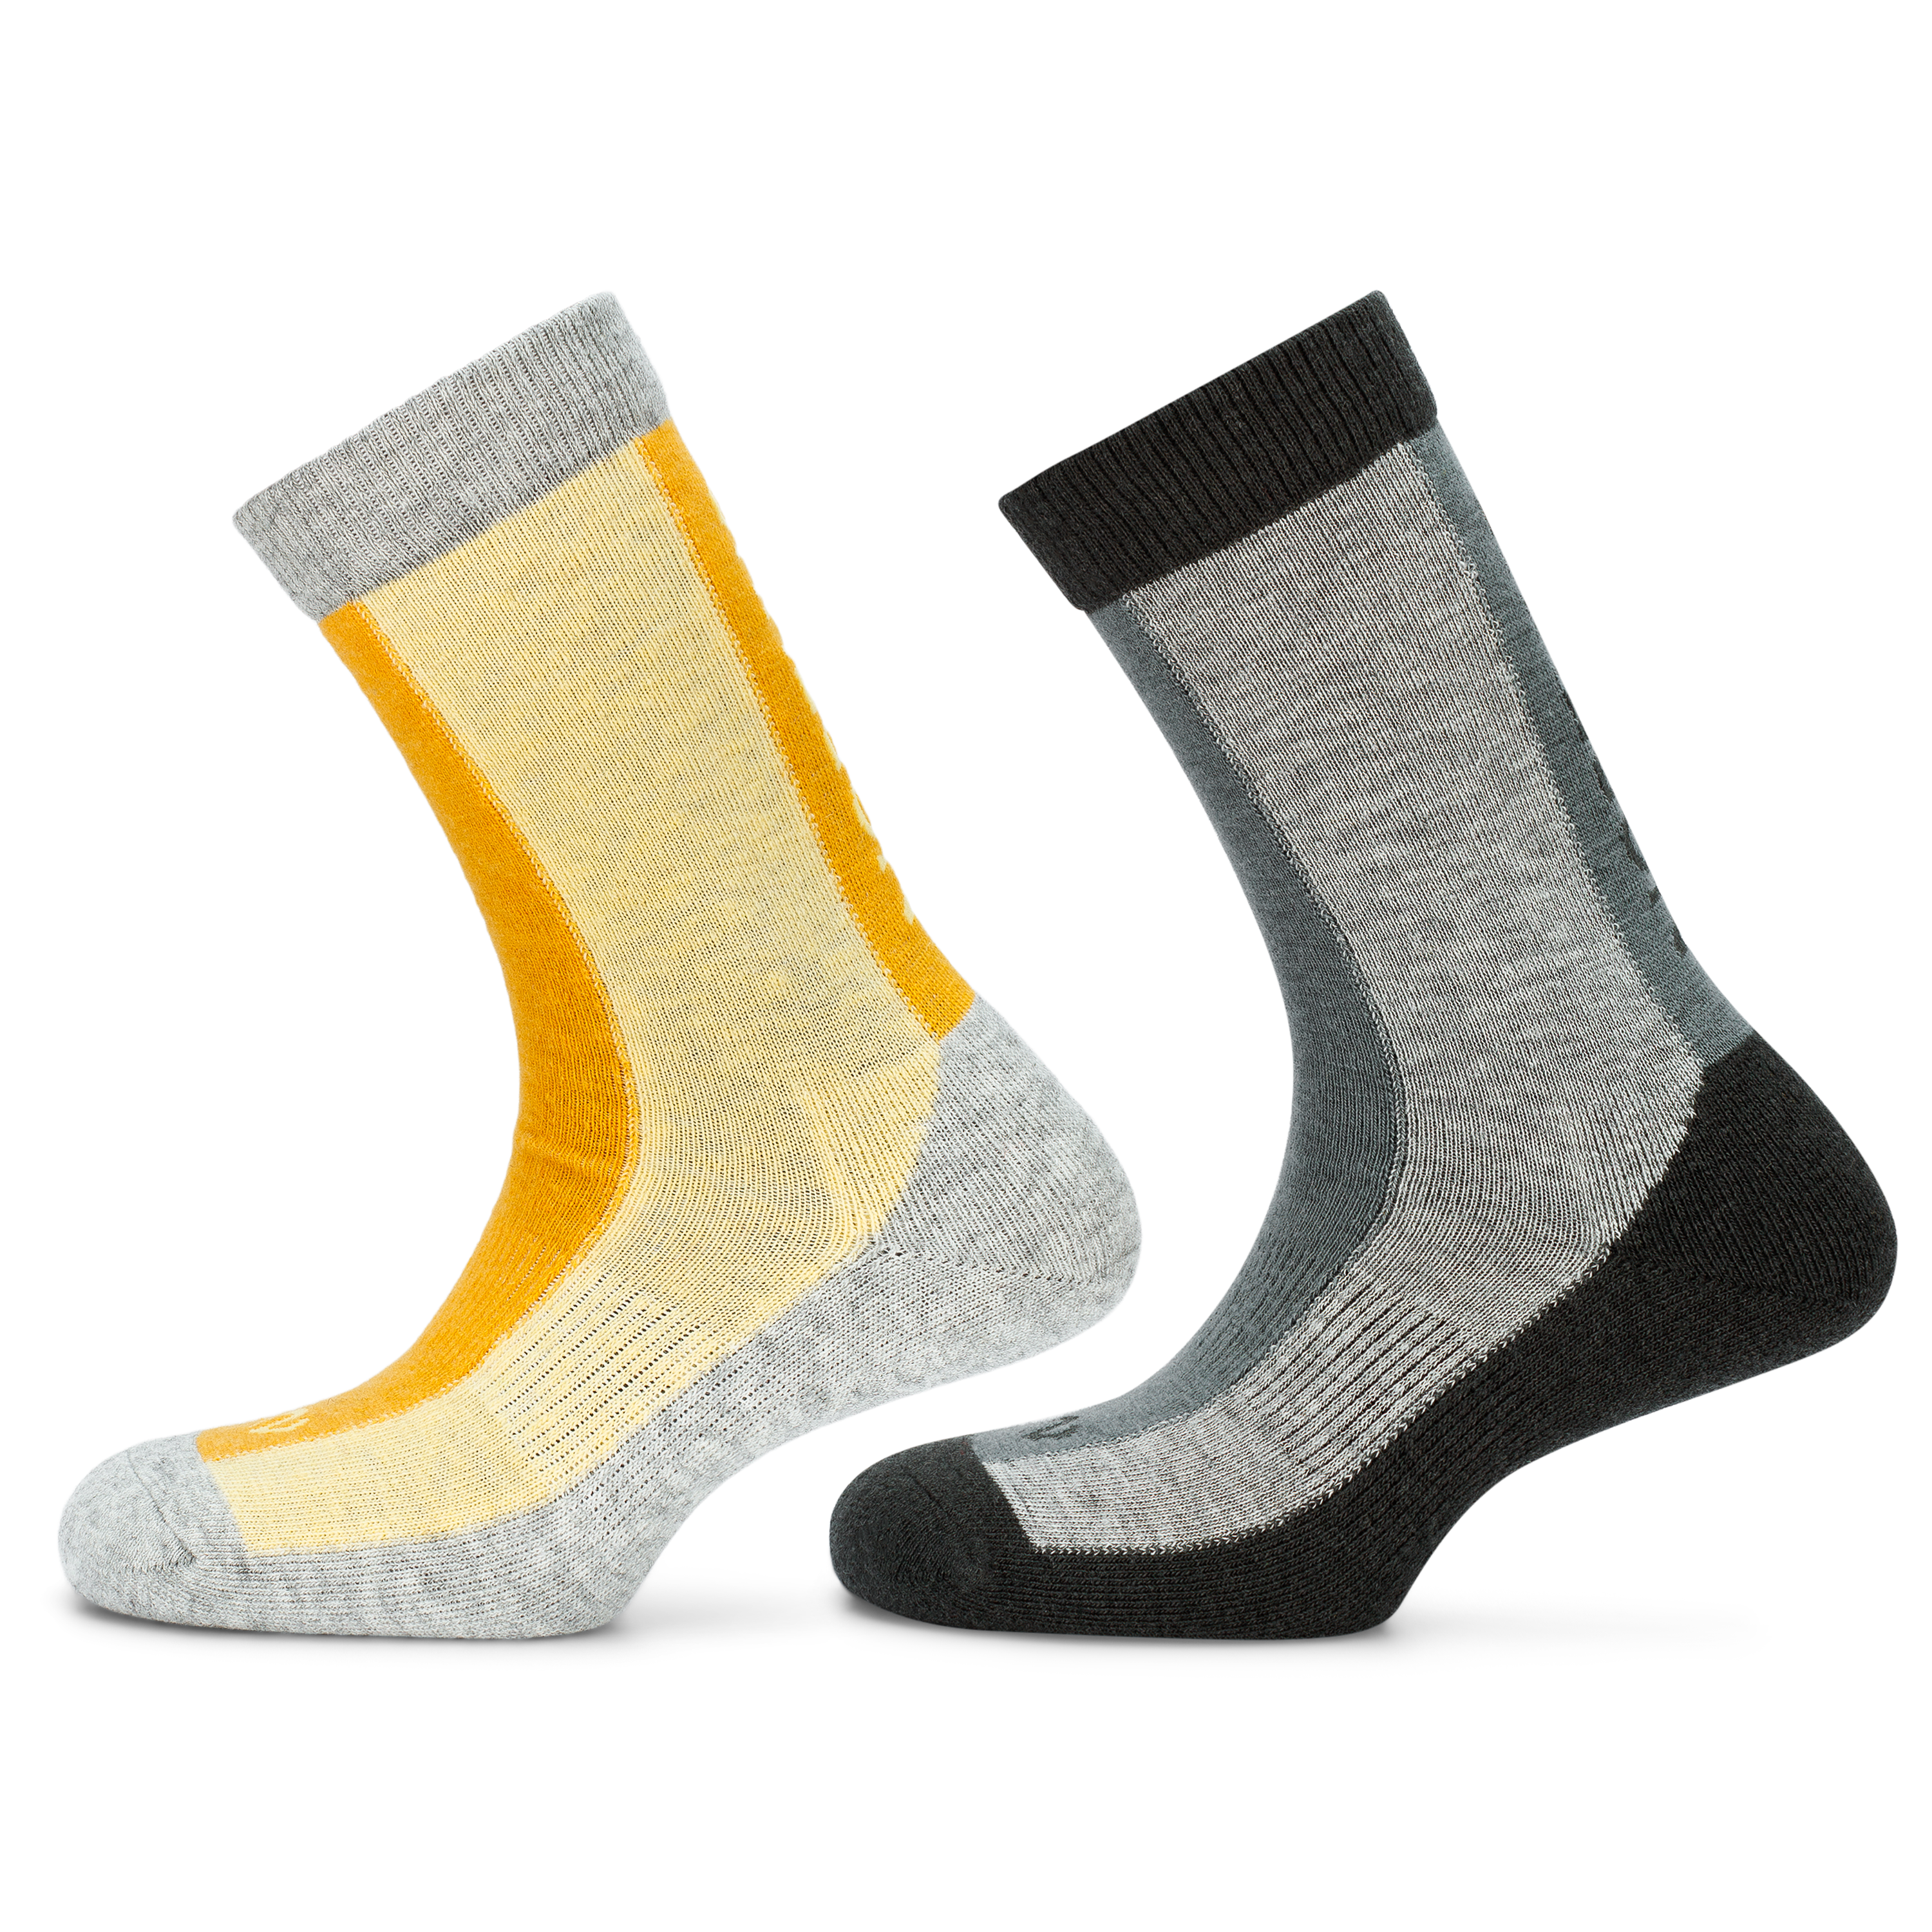 Northug Hovden 2PK Wool Socks, Unisex